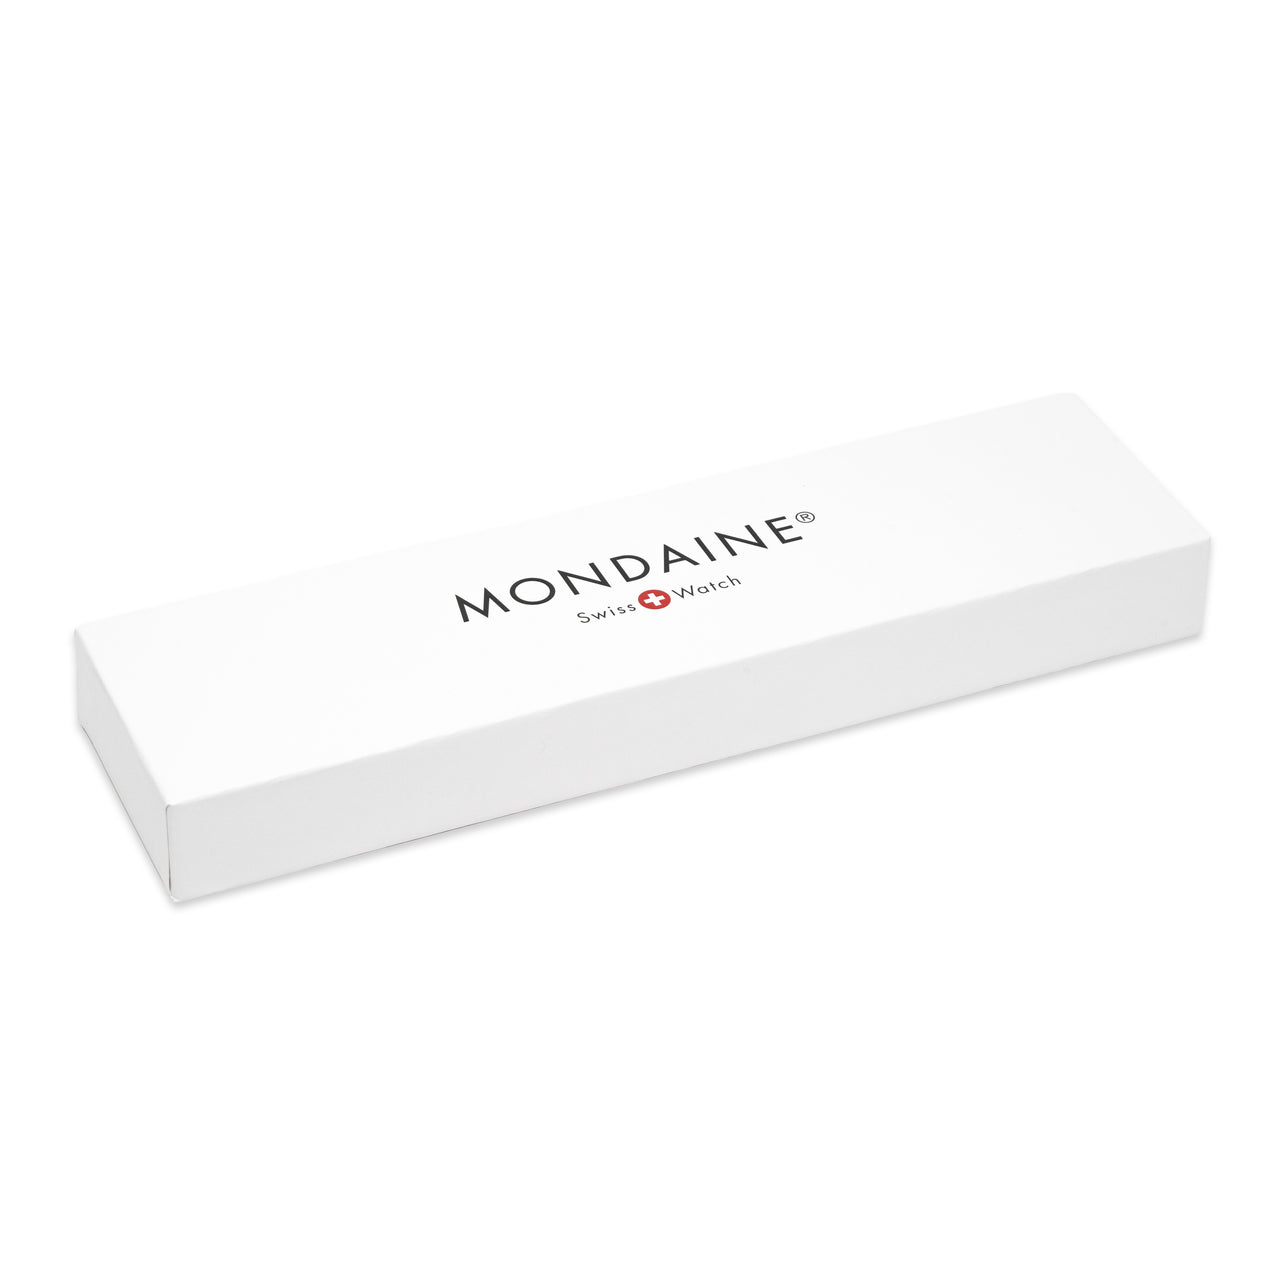 Mondaine Watch Essence Black White MS1.41110.LA